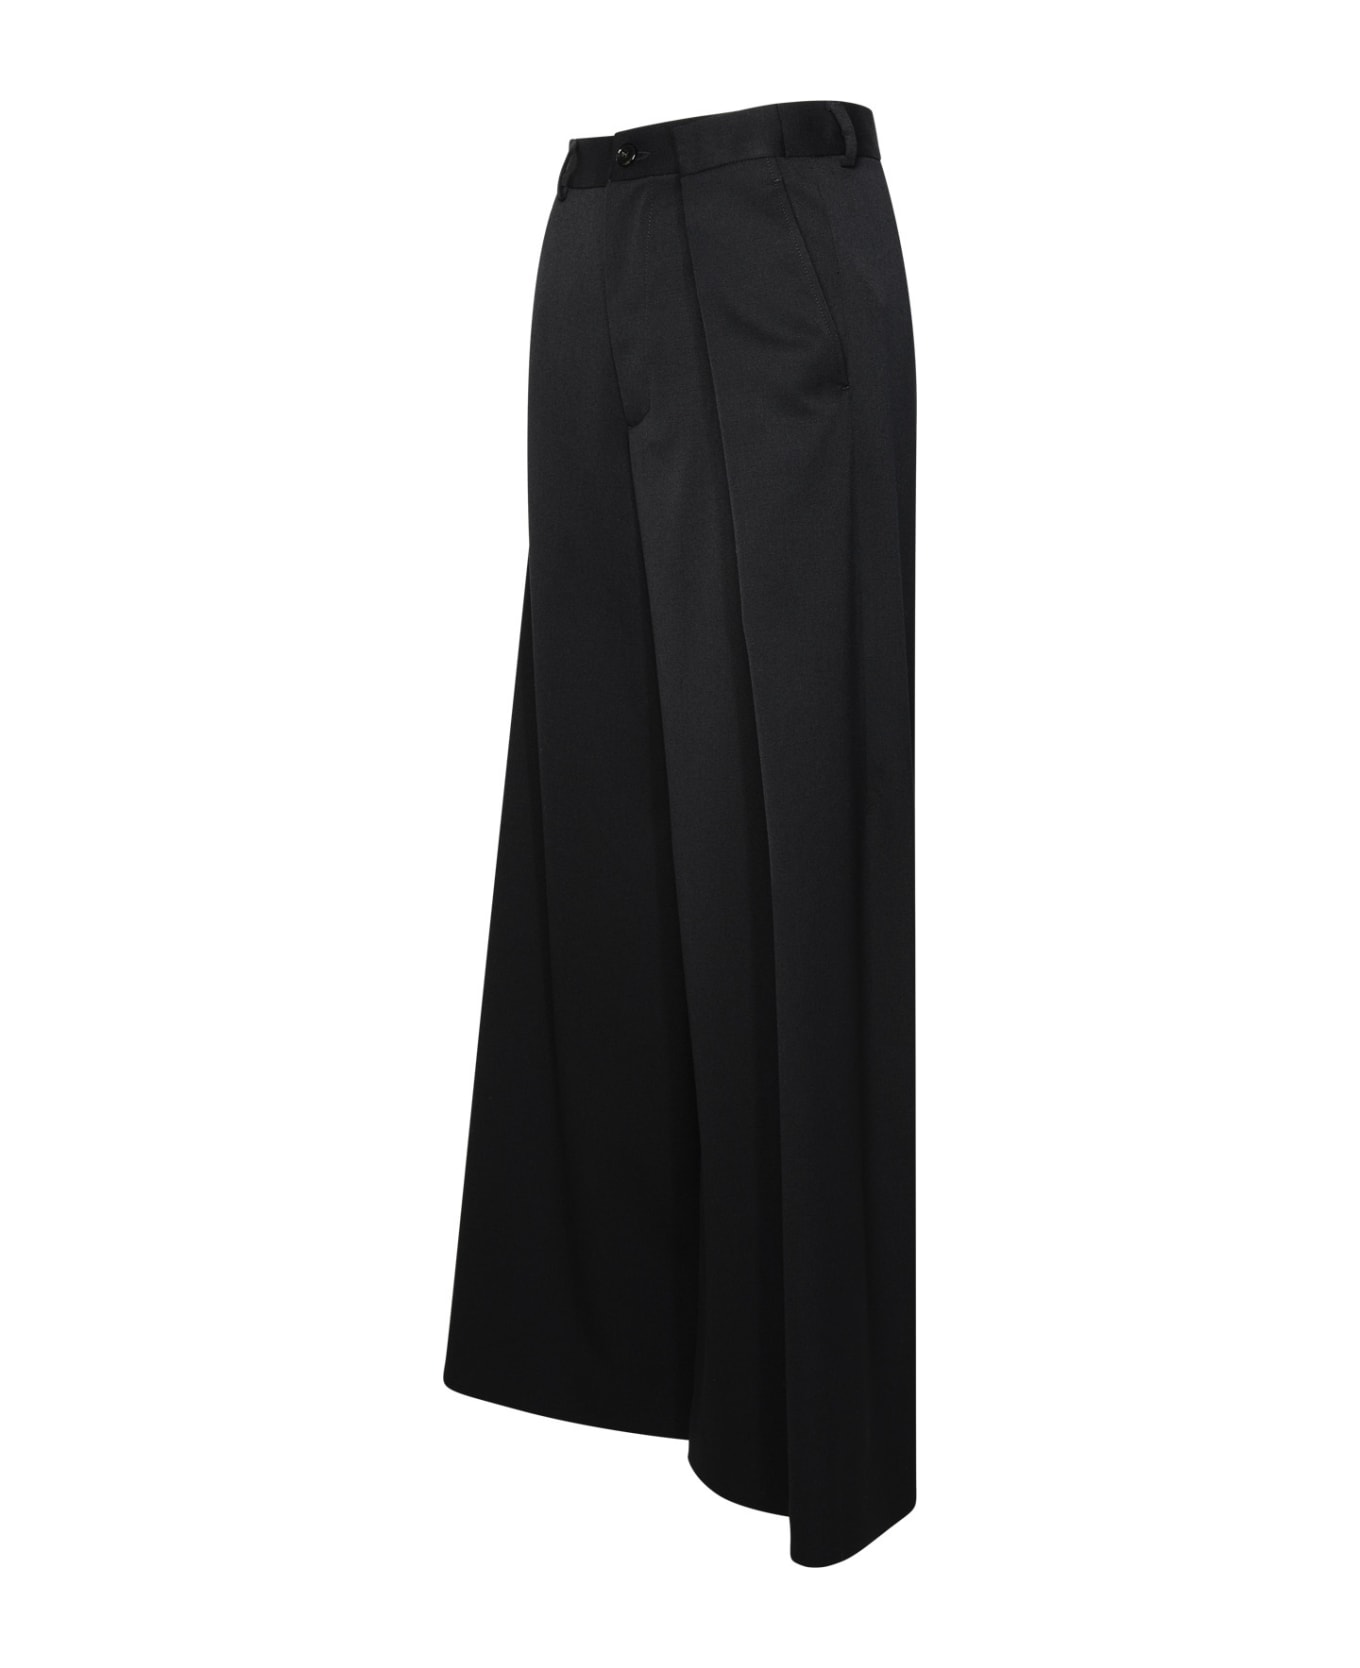 MM6 Maison Margiela Black Virgin Wool Blend Tailored Trousers - Black ボトムス